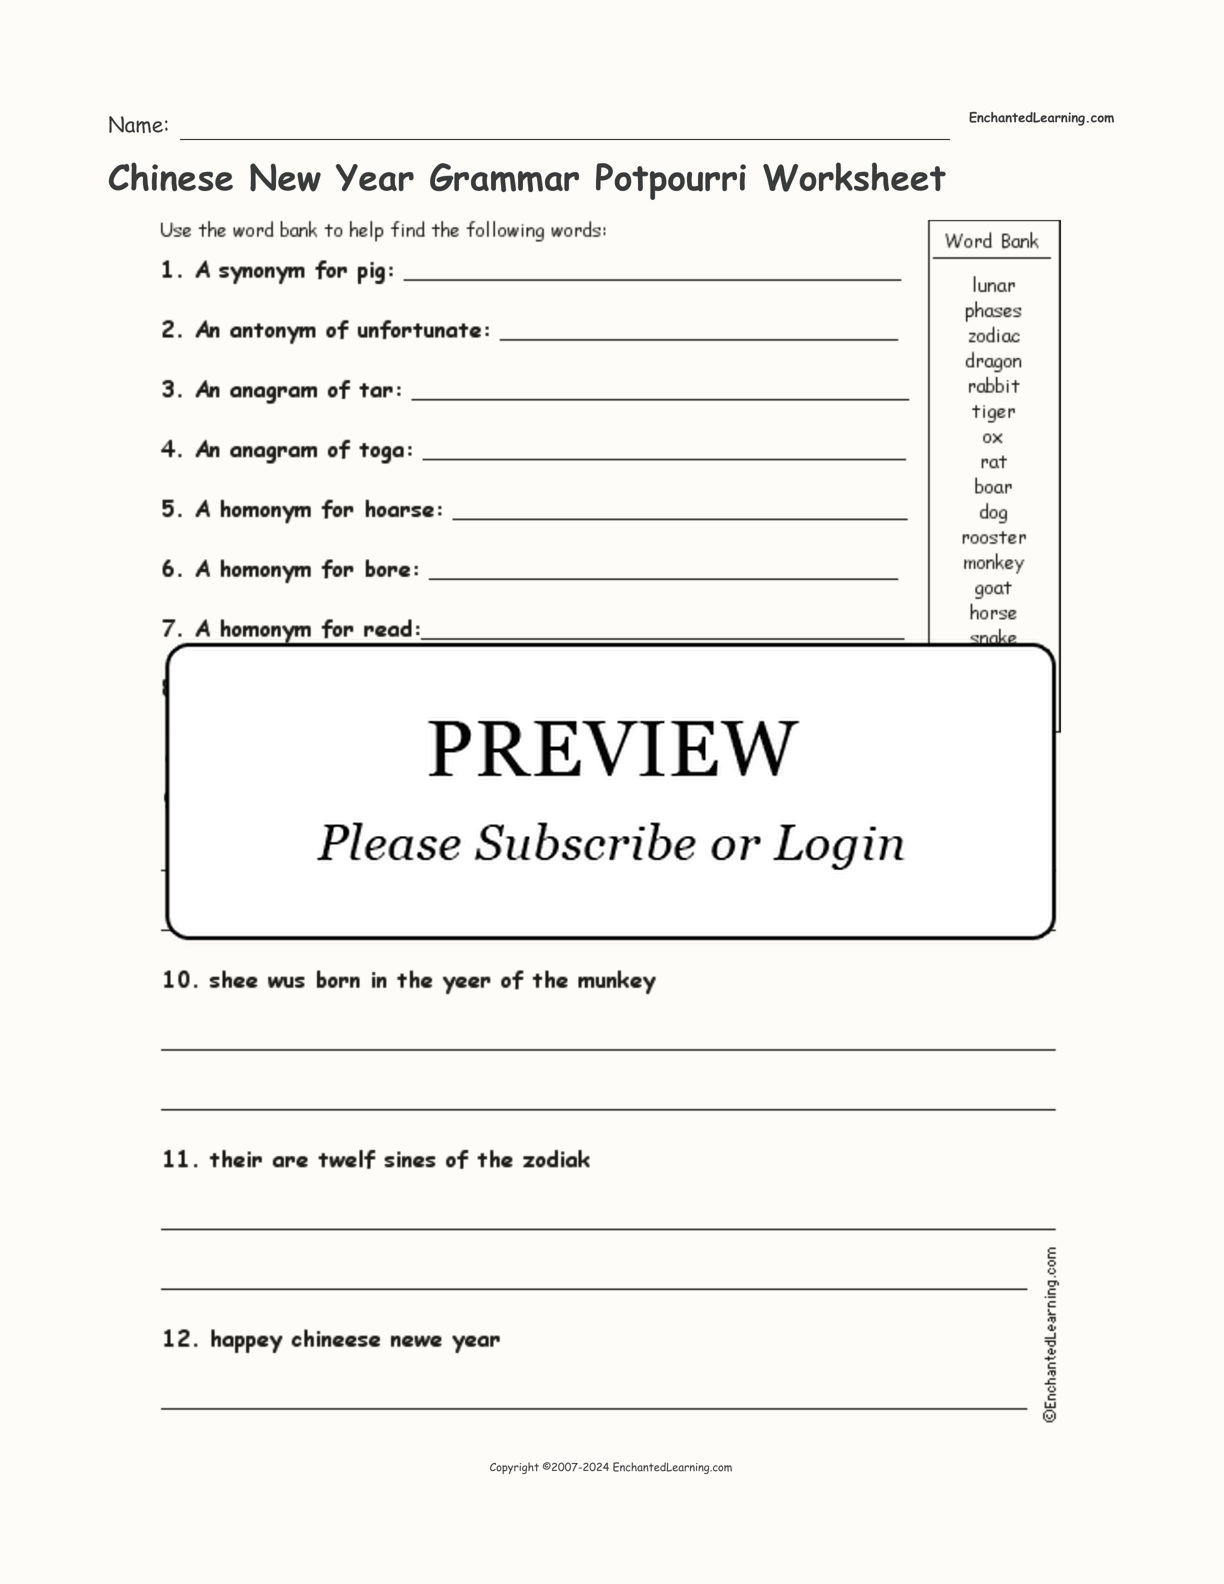 Chinese New Year Grammar Potpourri Worksheet interactive worksheet page 1